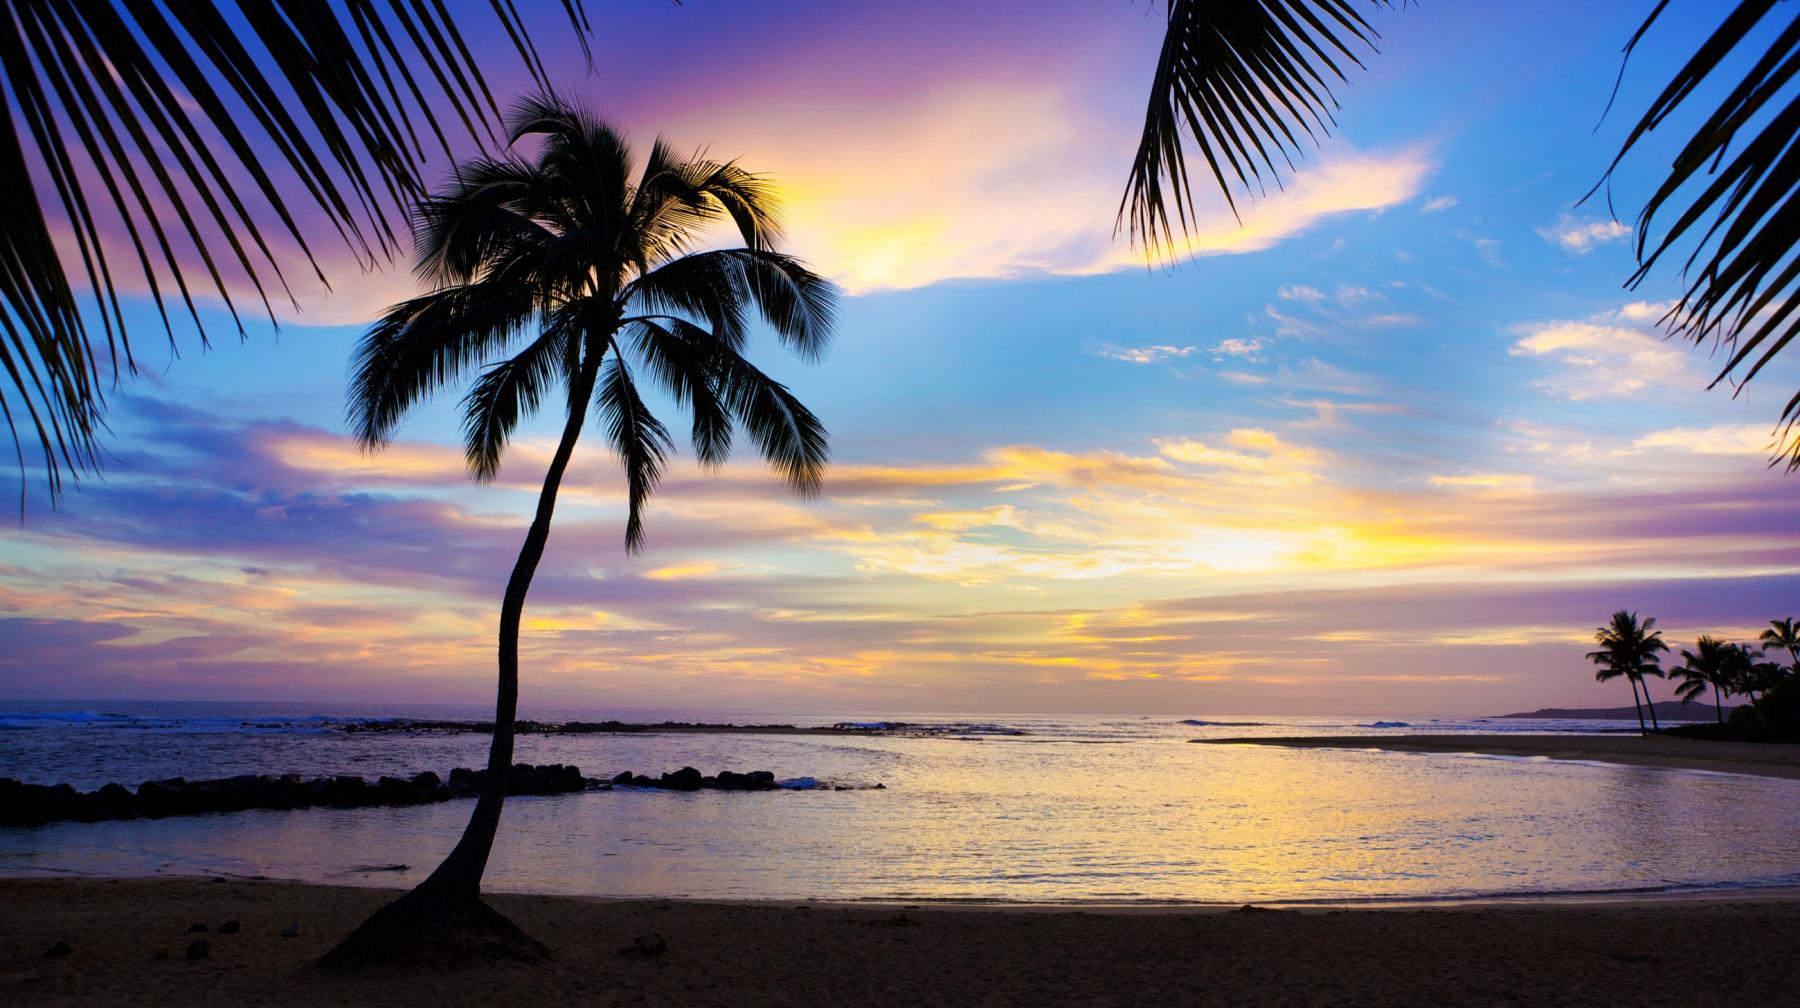 Palm Tree in the Kauai Sunset